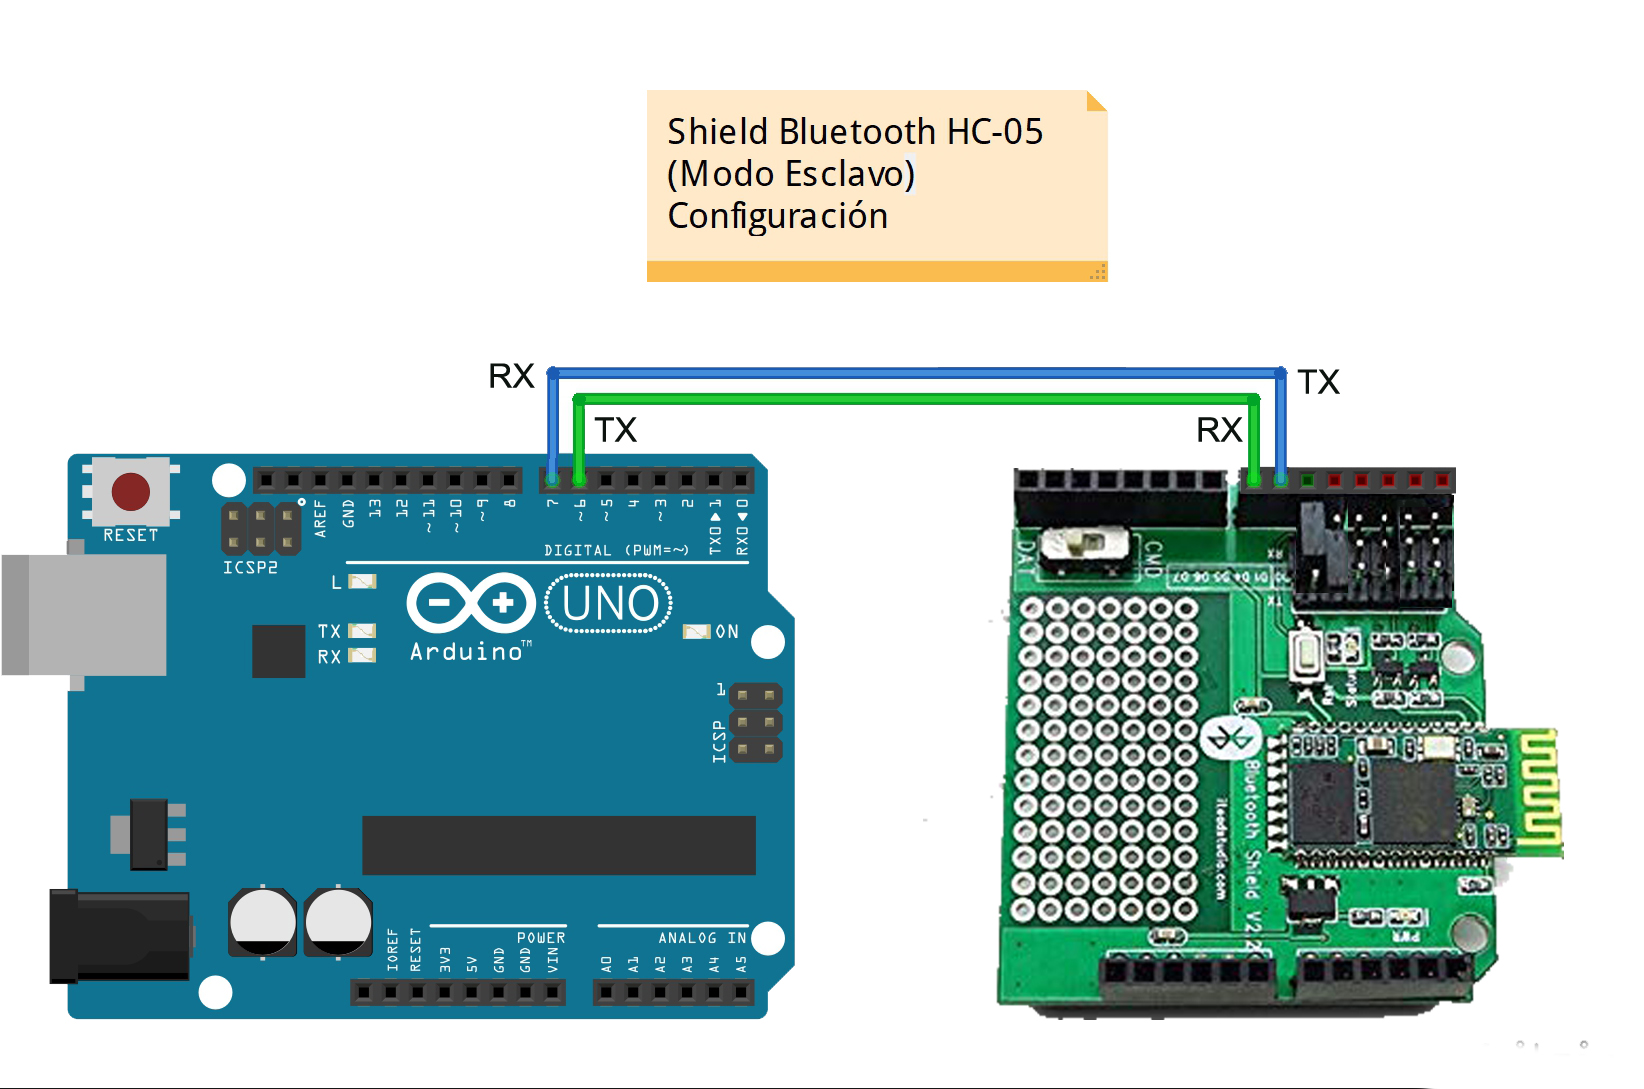 Configuracion Shield Bluetooth HC-05